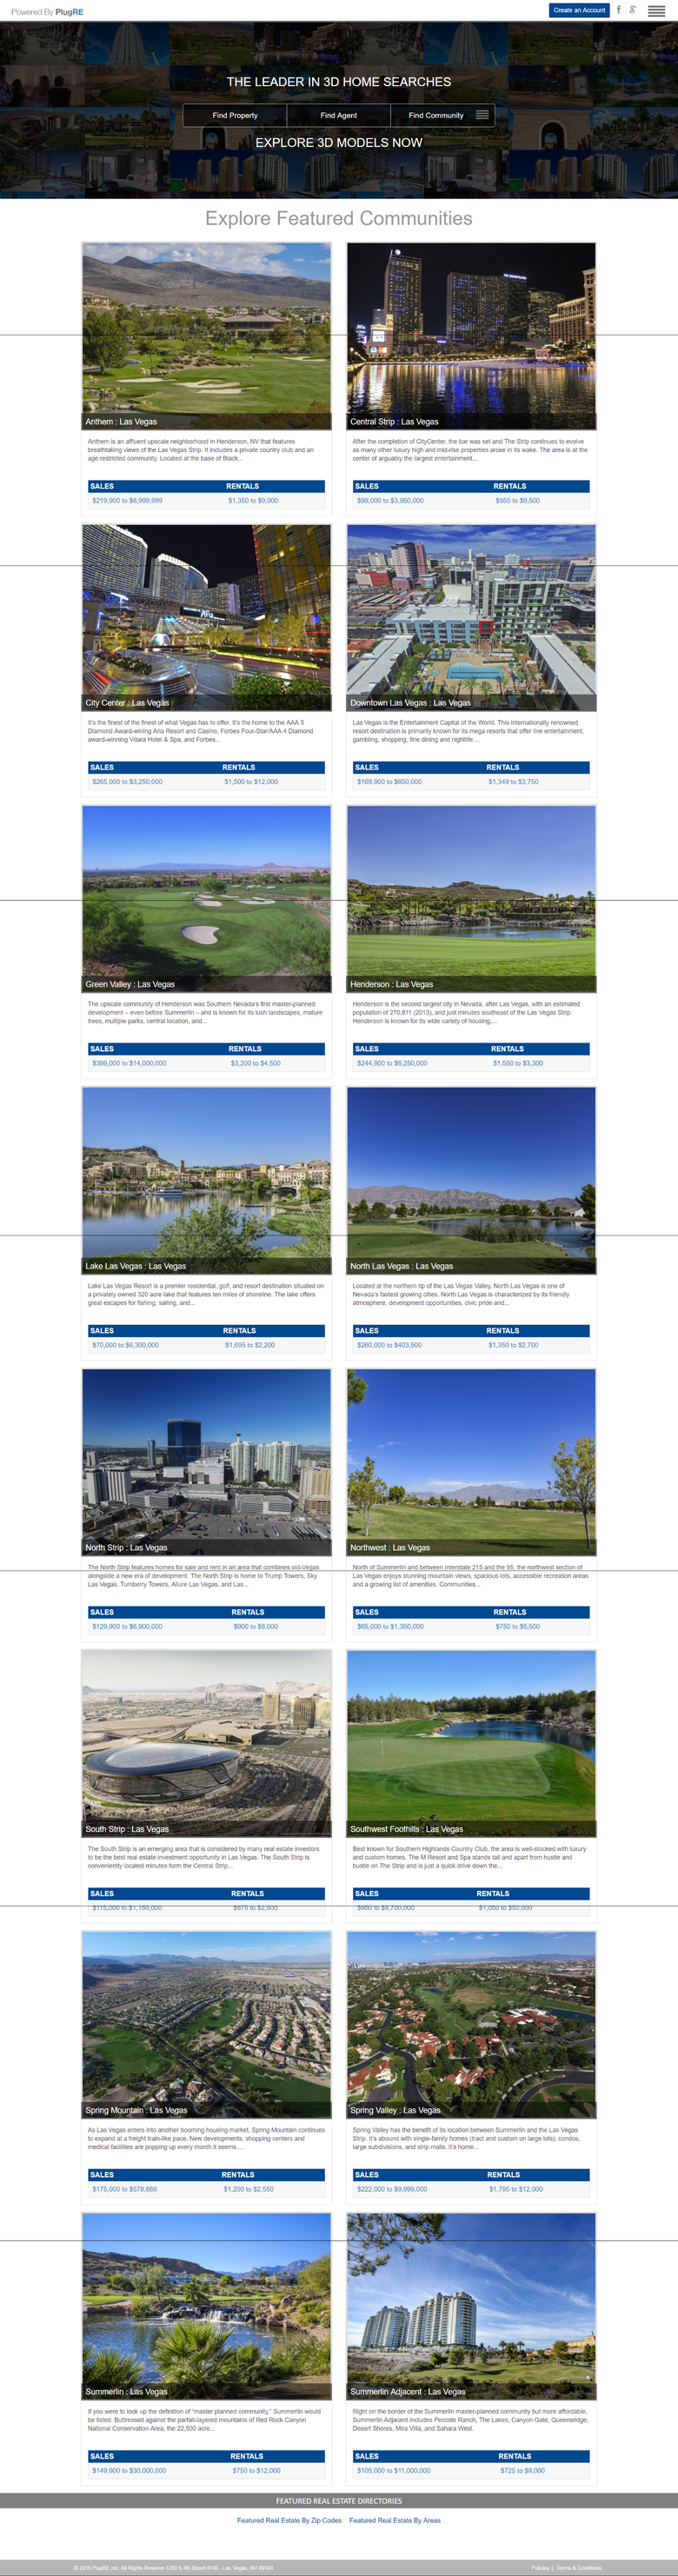 Las Vegas Real Estate and Property Values - Plugre.com